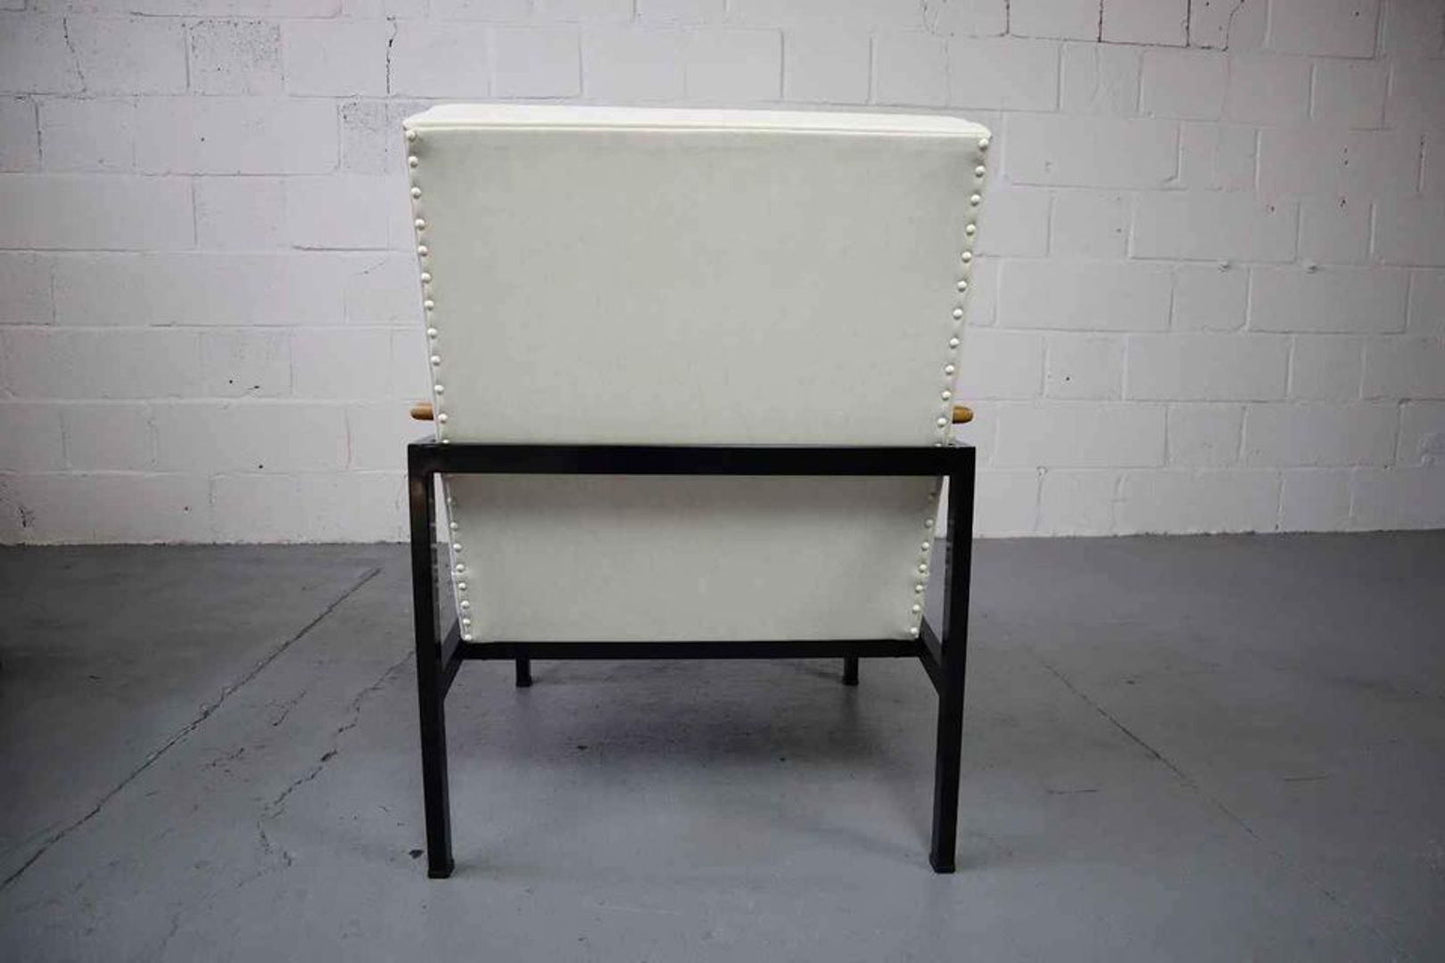 Pair of Mid century Modern armchairs, 1960's